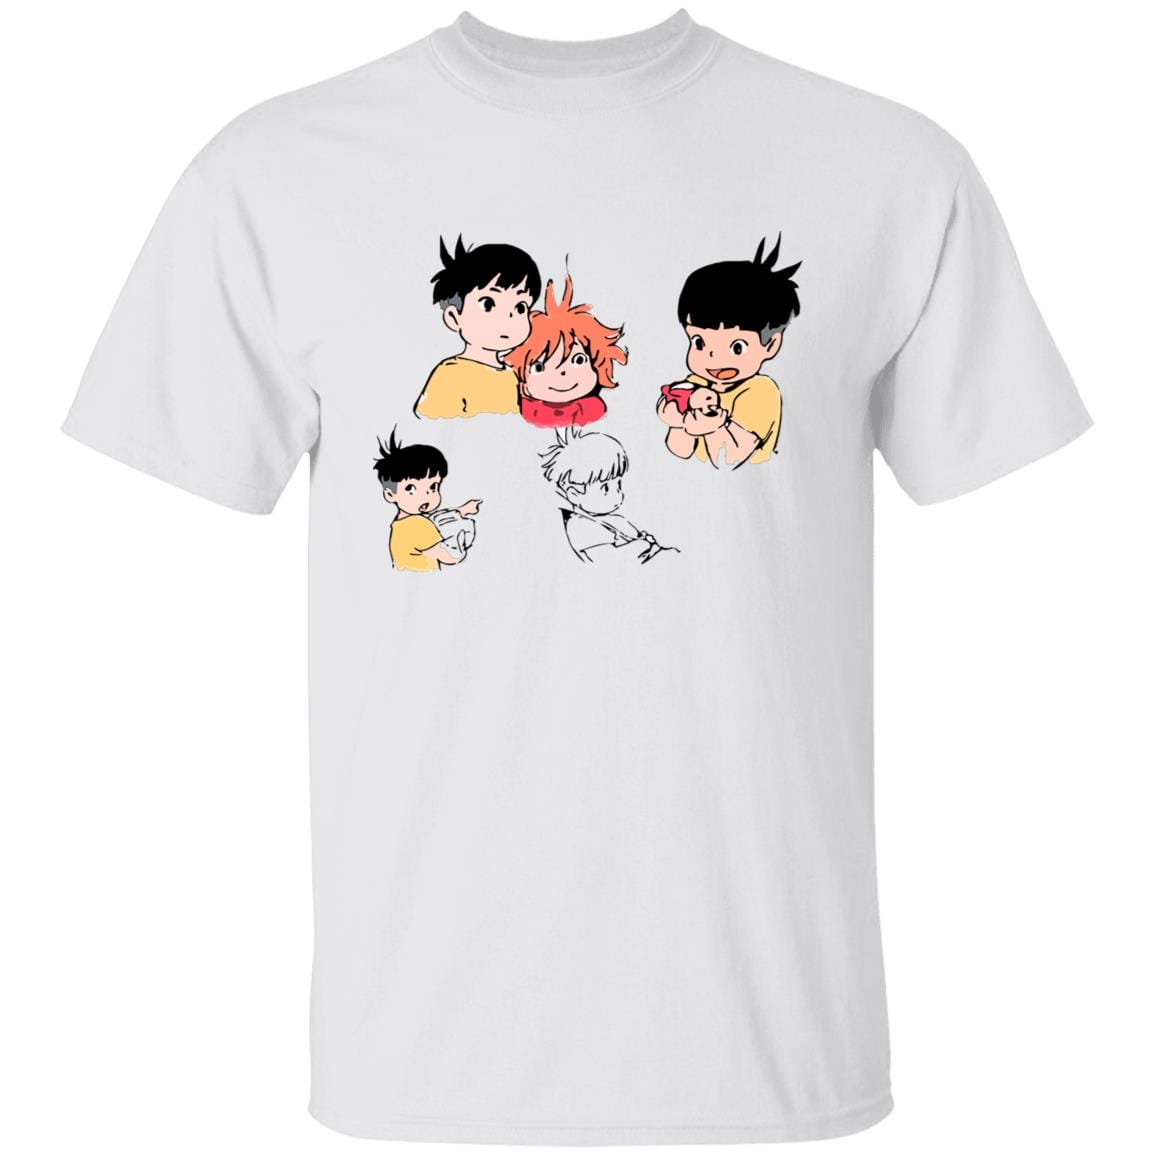 Ponyo and Sosuke Sketch T Shirt Ghibli Store ghibli.store